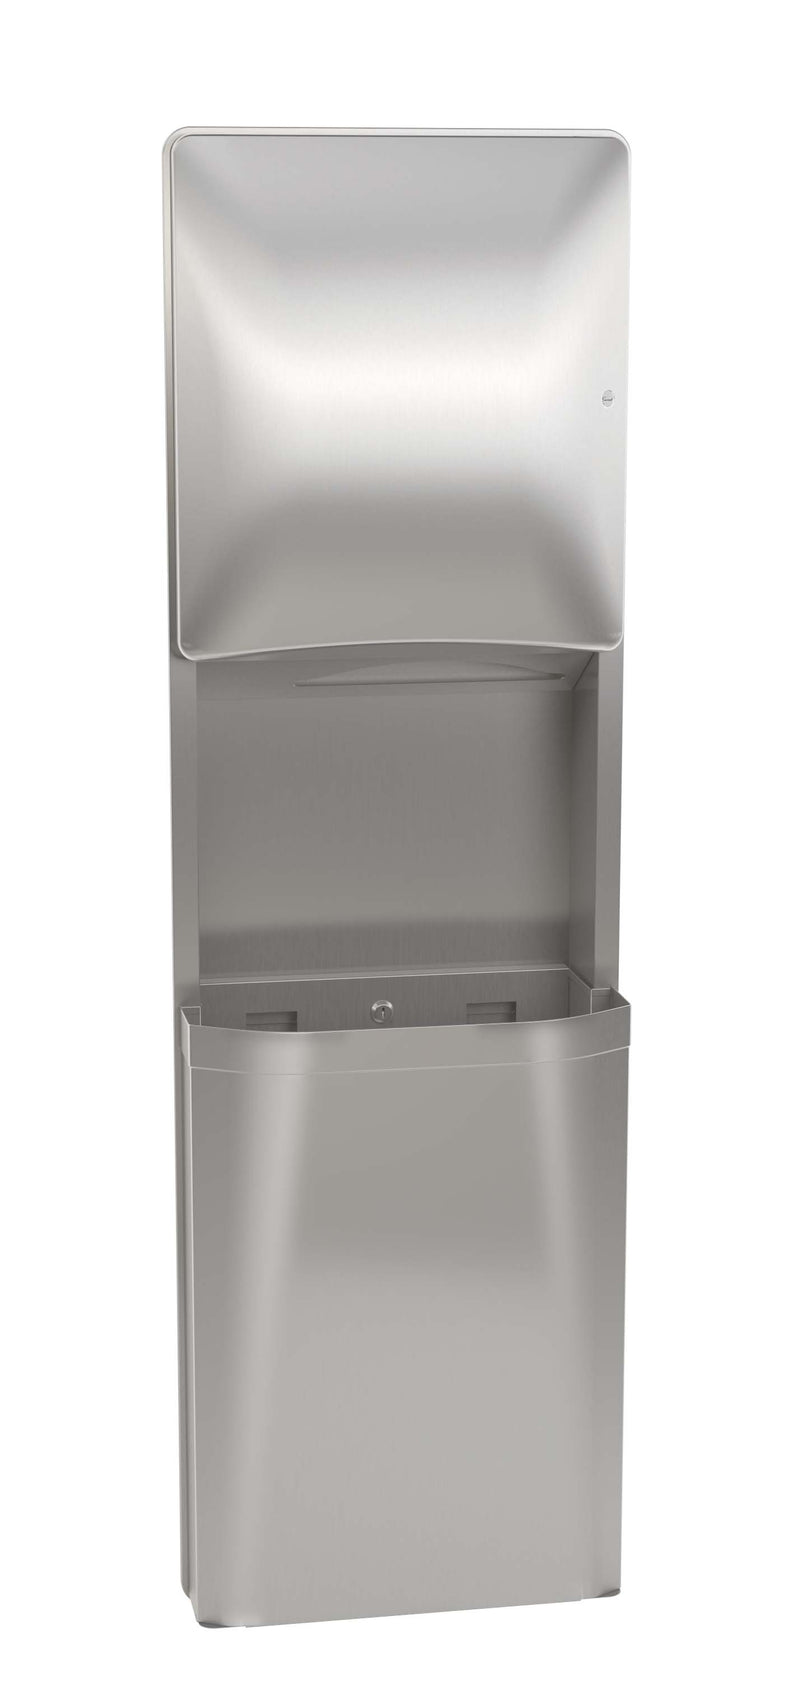 Bradley 2A15-36 Paper Towel Dispenser Waste Receptacle Combo Unit